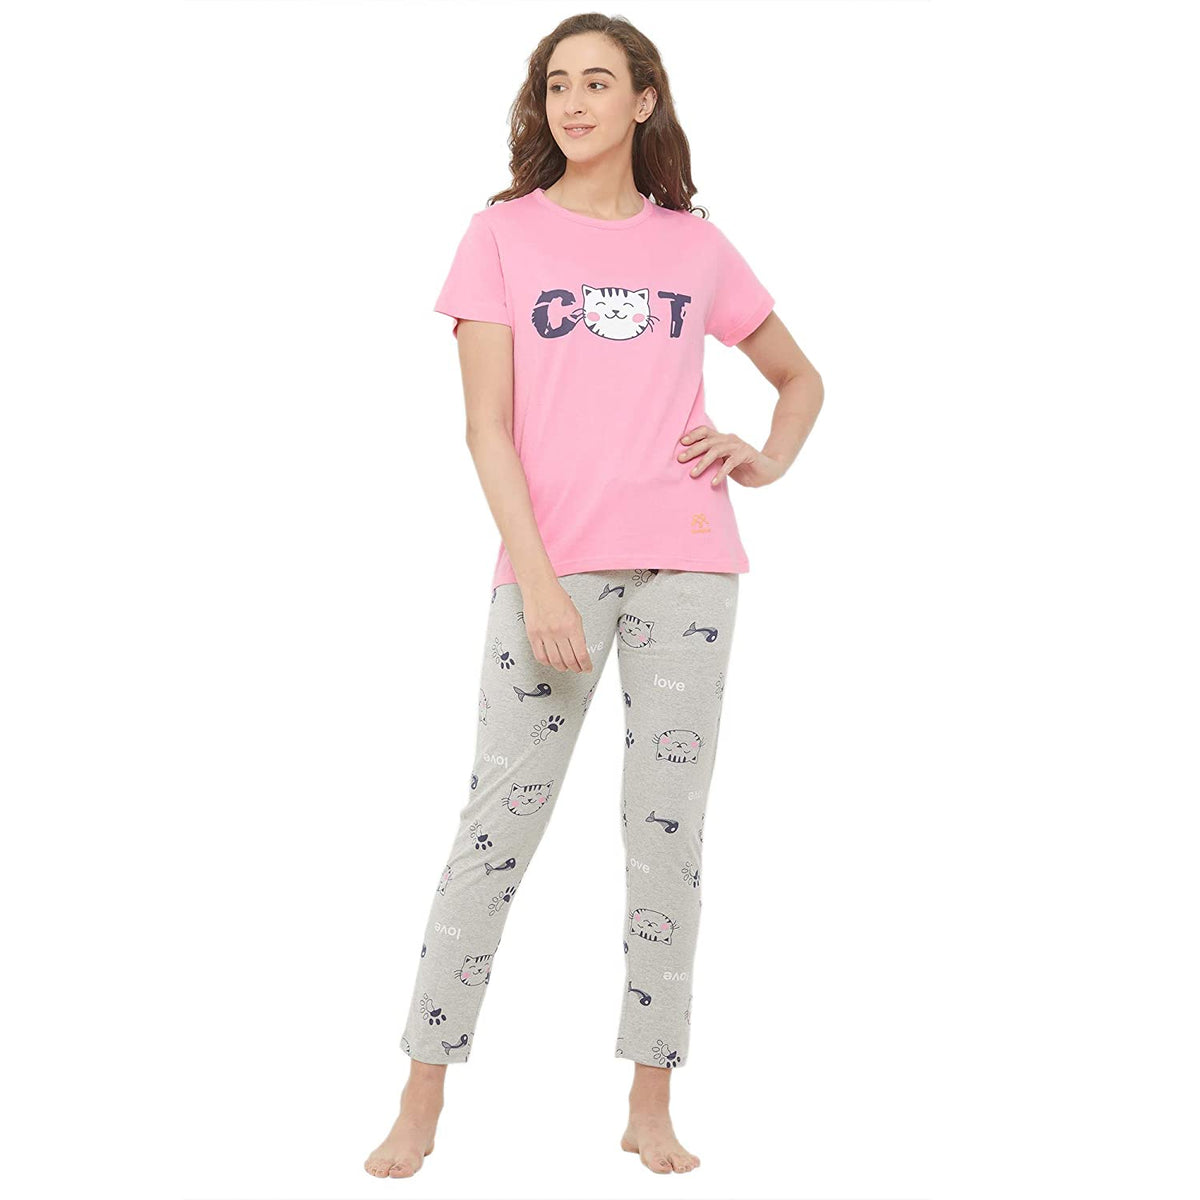 Evolove Women's Pyjama Set Cotton | Tshirt Pyjama Set for Women Night Wear for Daily Use with Pockets & Pants Super Soft Comfortable